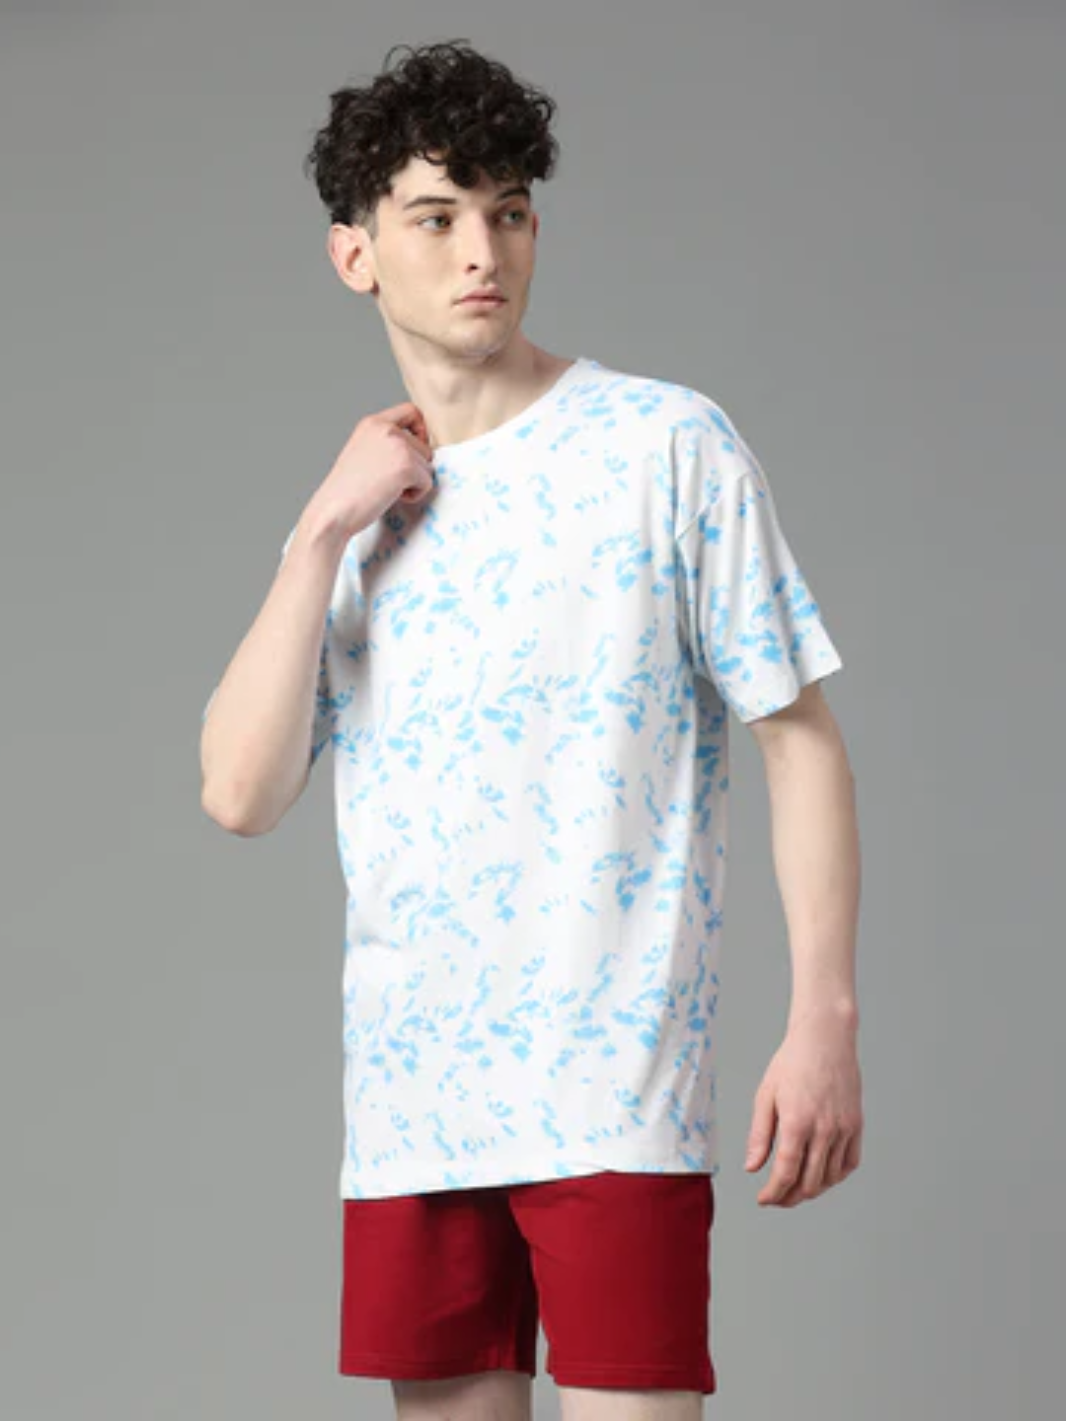 Tie Dye Blue and White Graphic Printed Men's Regular T-shirt